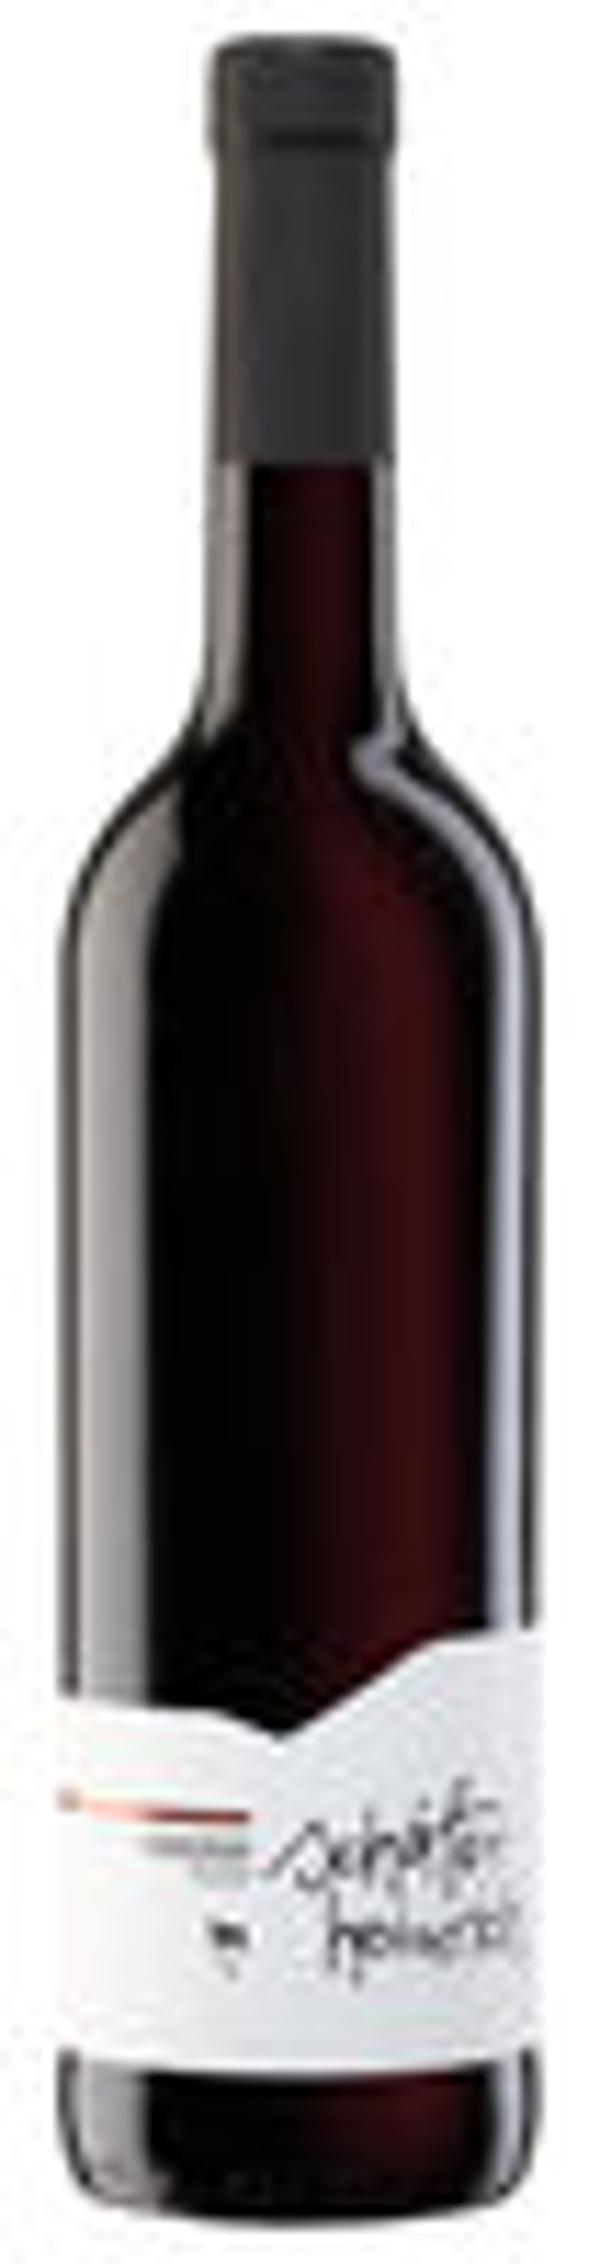 Produktfoto zu Lemberger Rotwein Kiste 6*0,75L